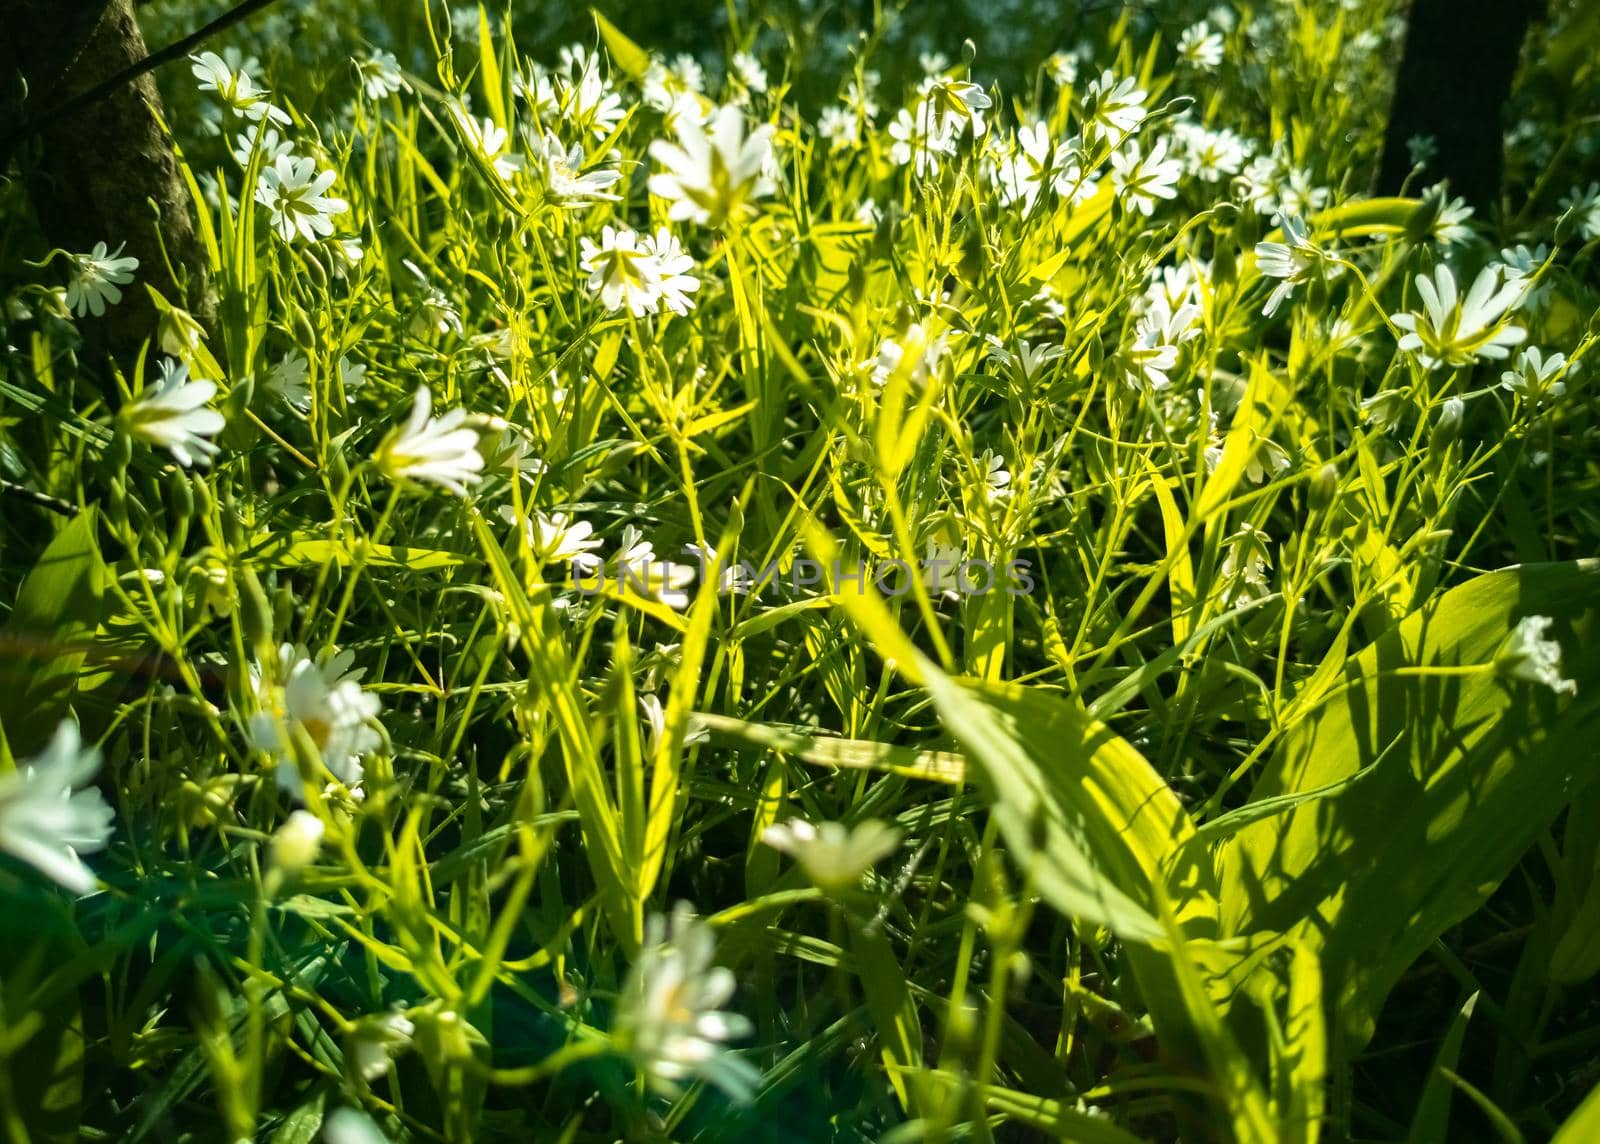 white wildflowers in greenery in sunlight. close-up creative focus. artistic blur